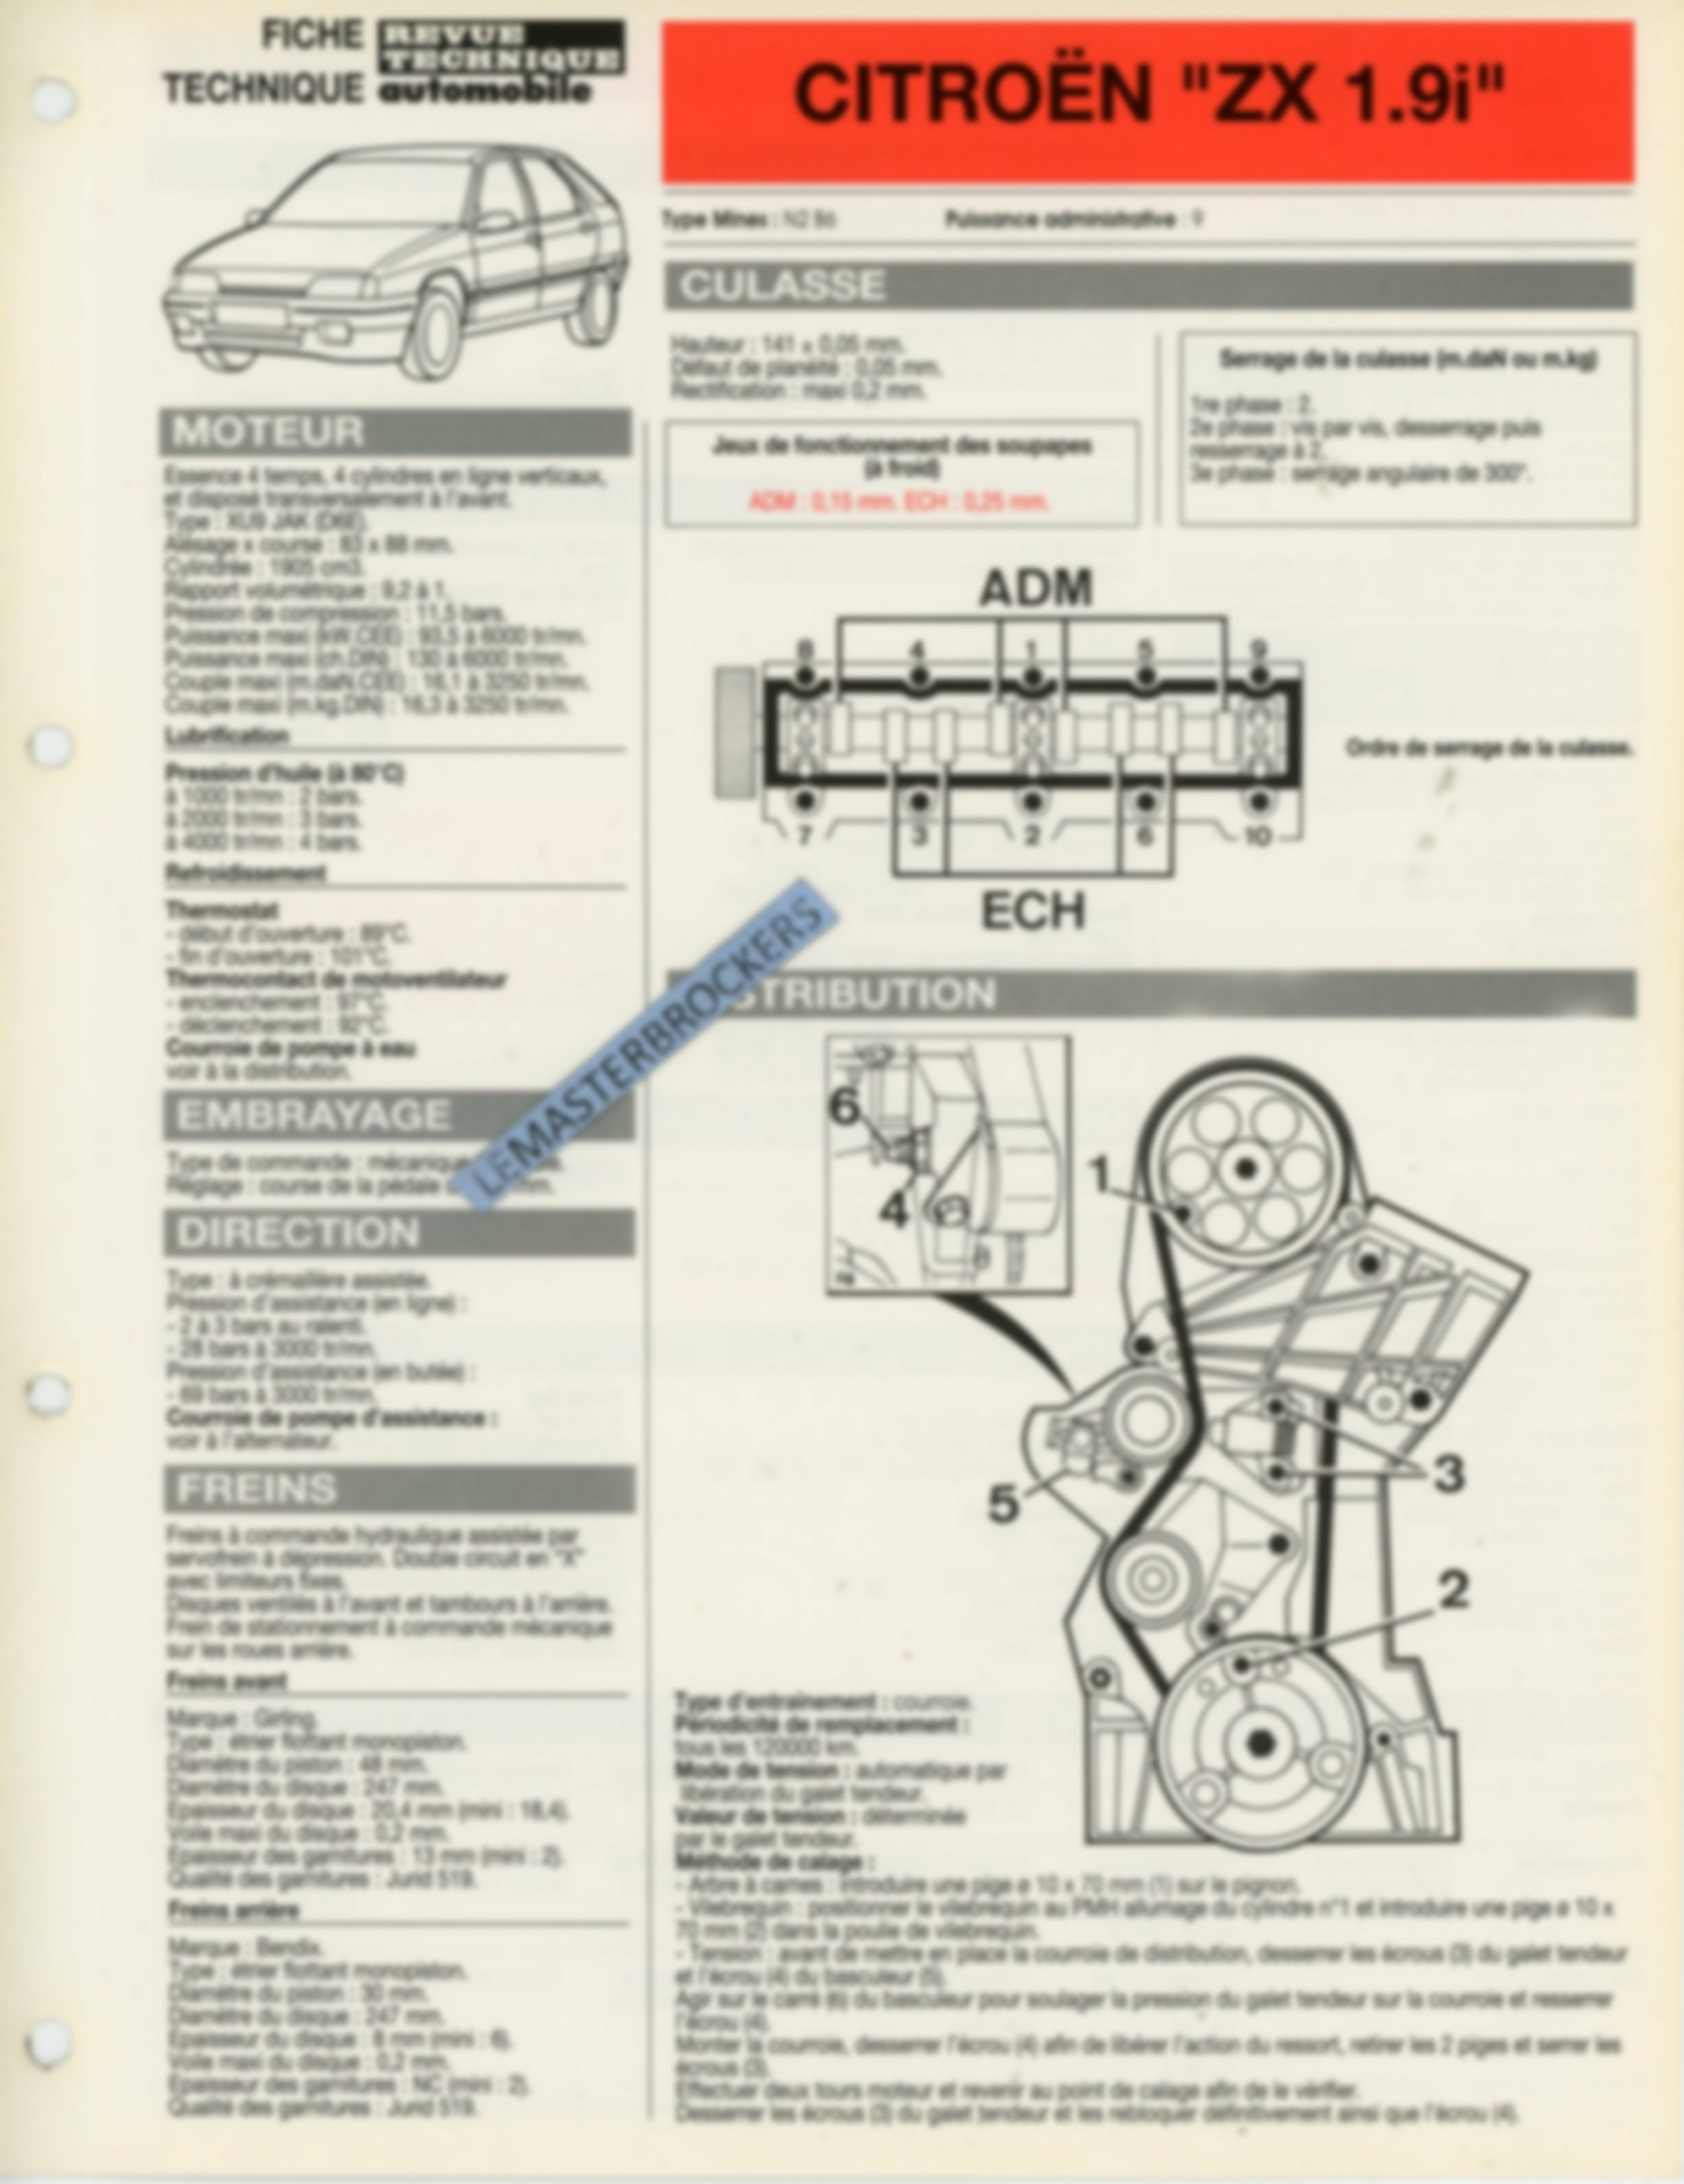 FICHE-TECHNIQUE-CITROËN-ZX-1.9i-1993-FICHE-RTA-AUTO-LEMASTERBROCKERS